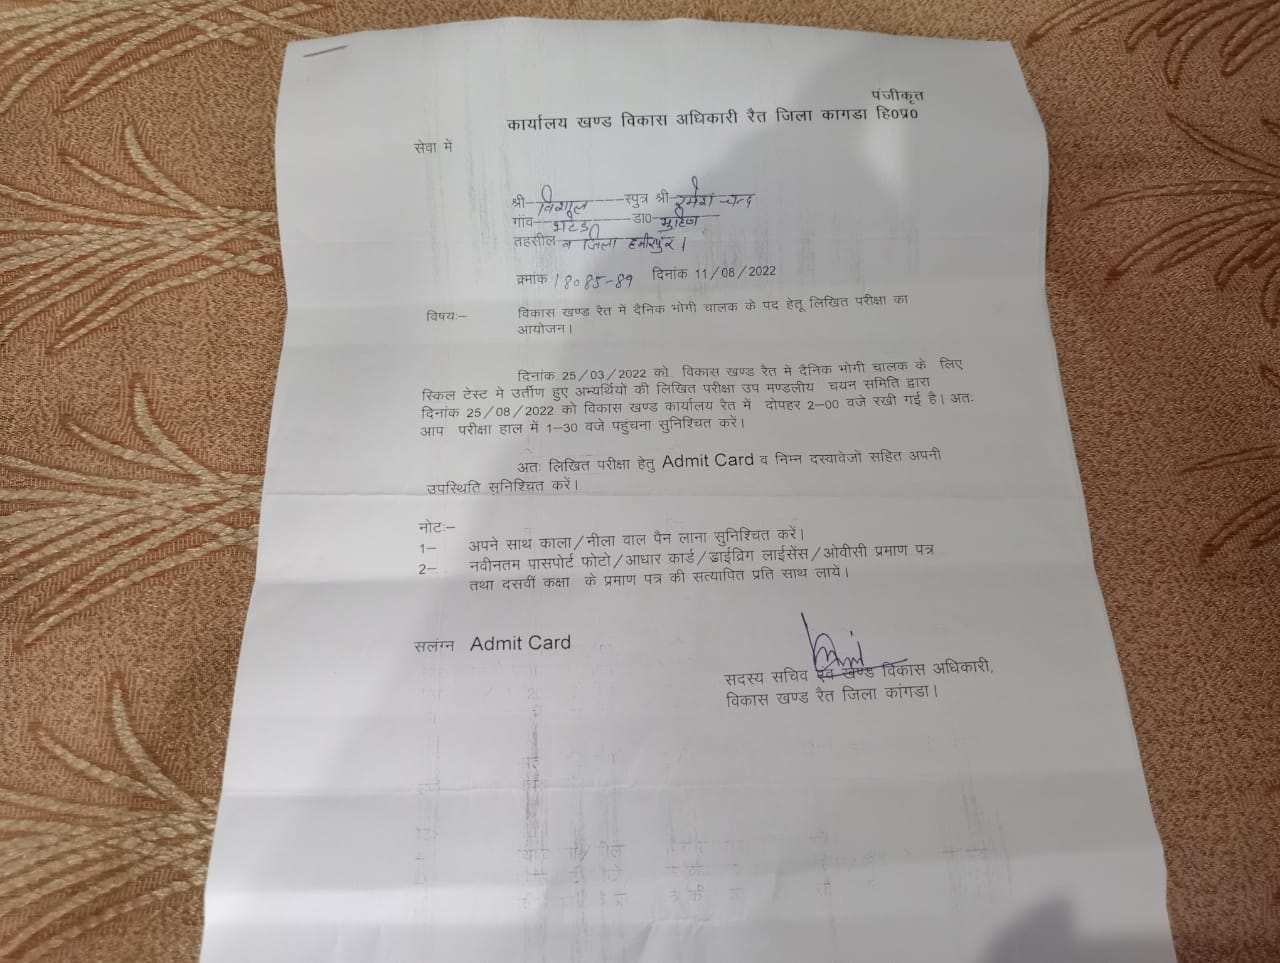 Negligence of Hamirpur Postal Department